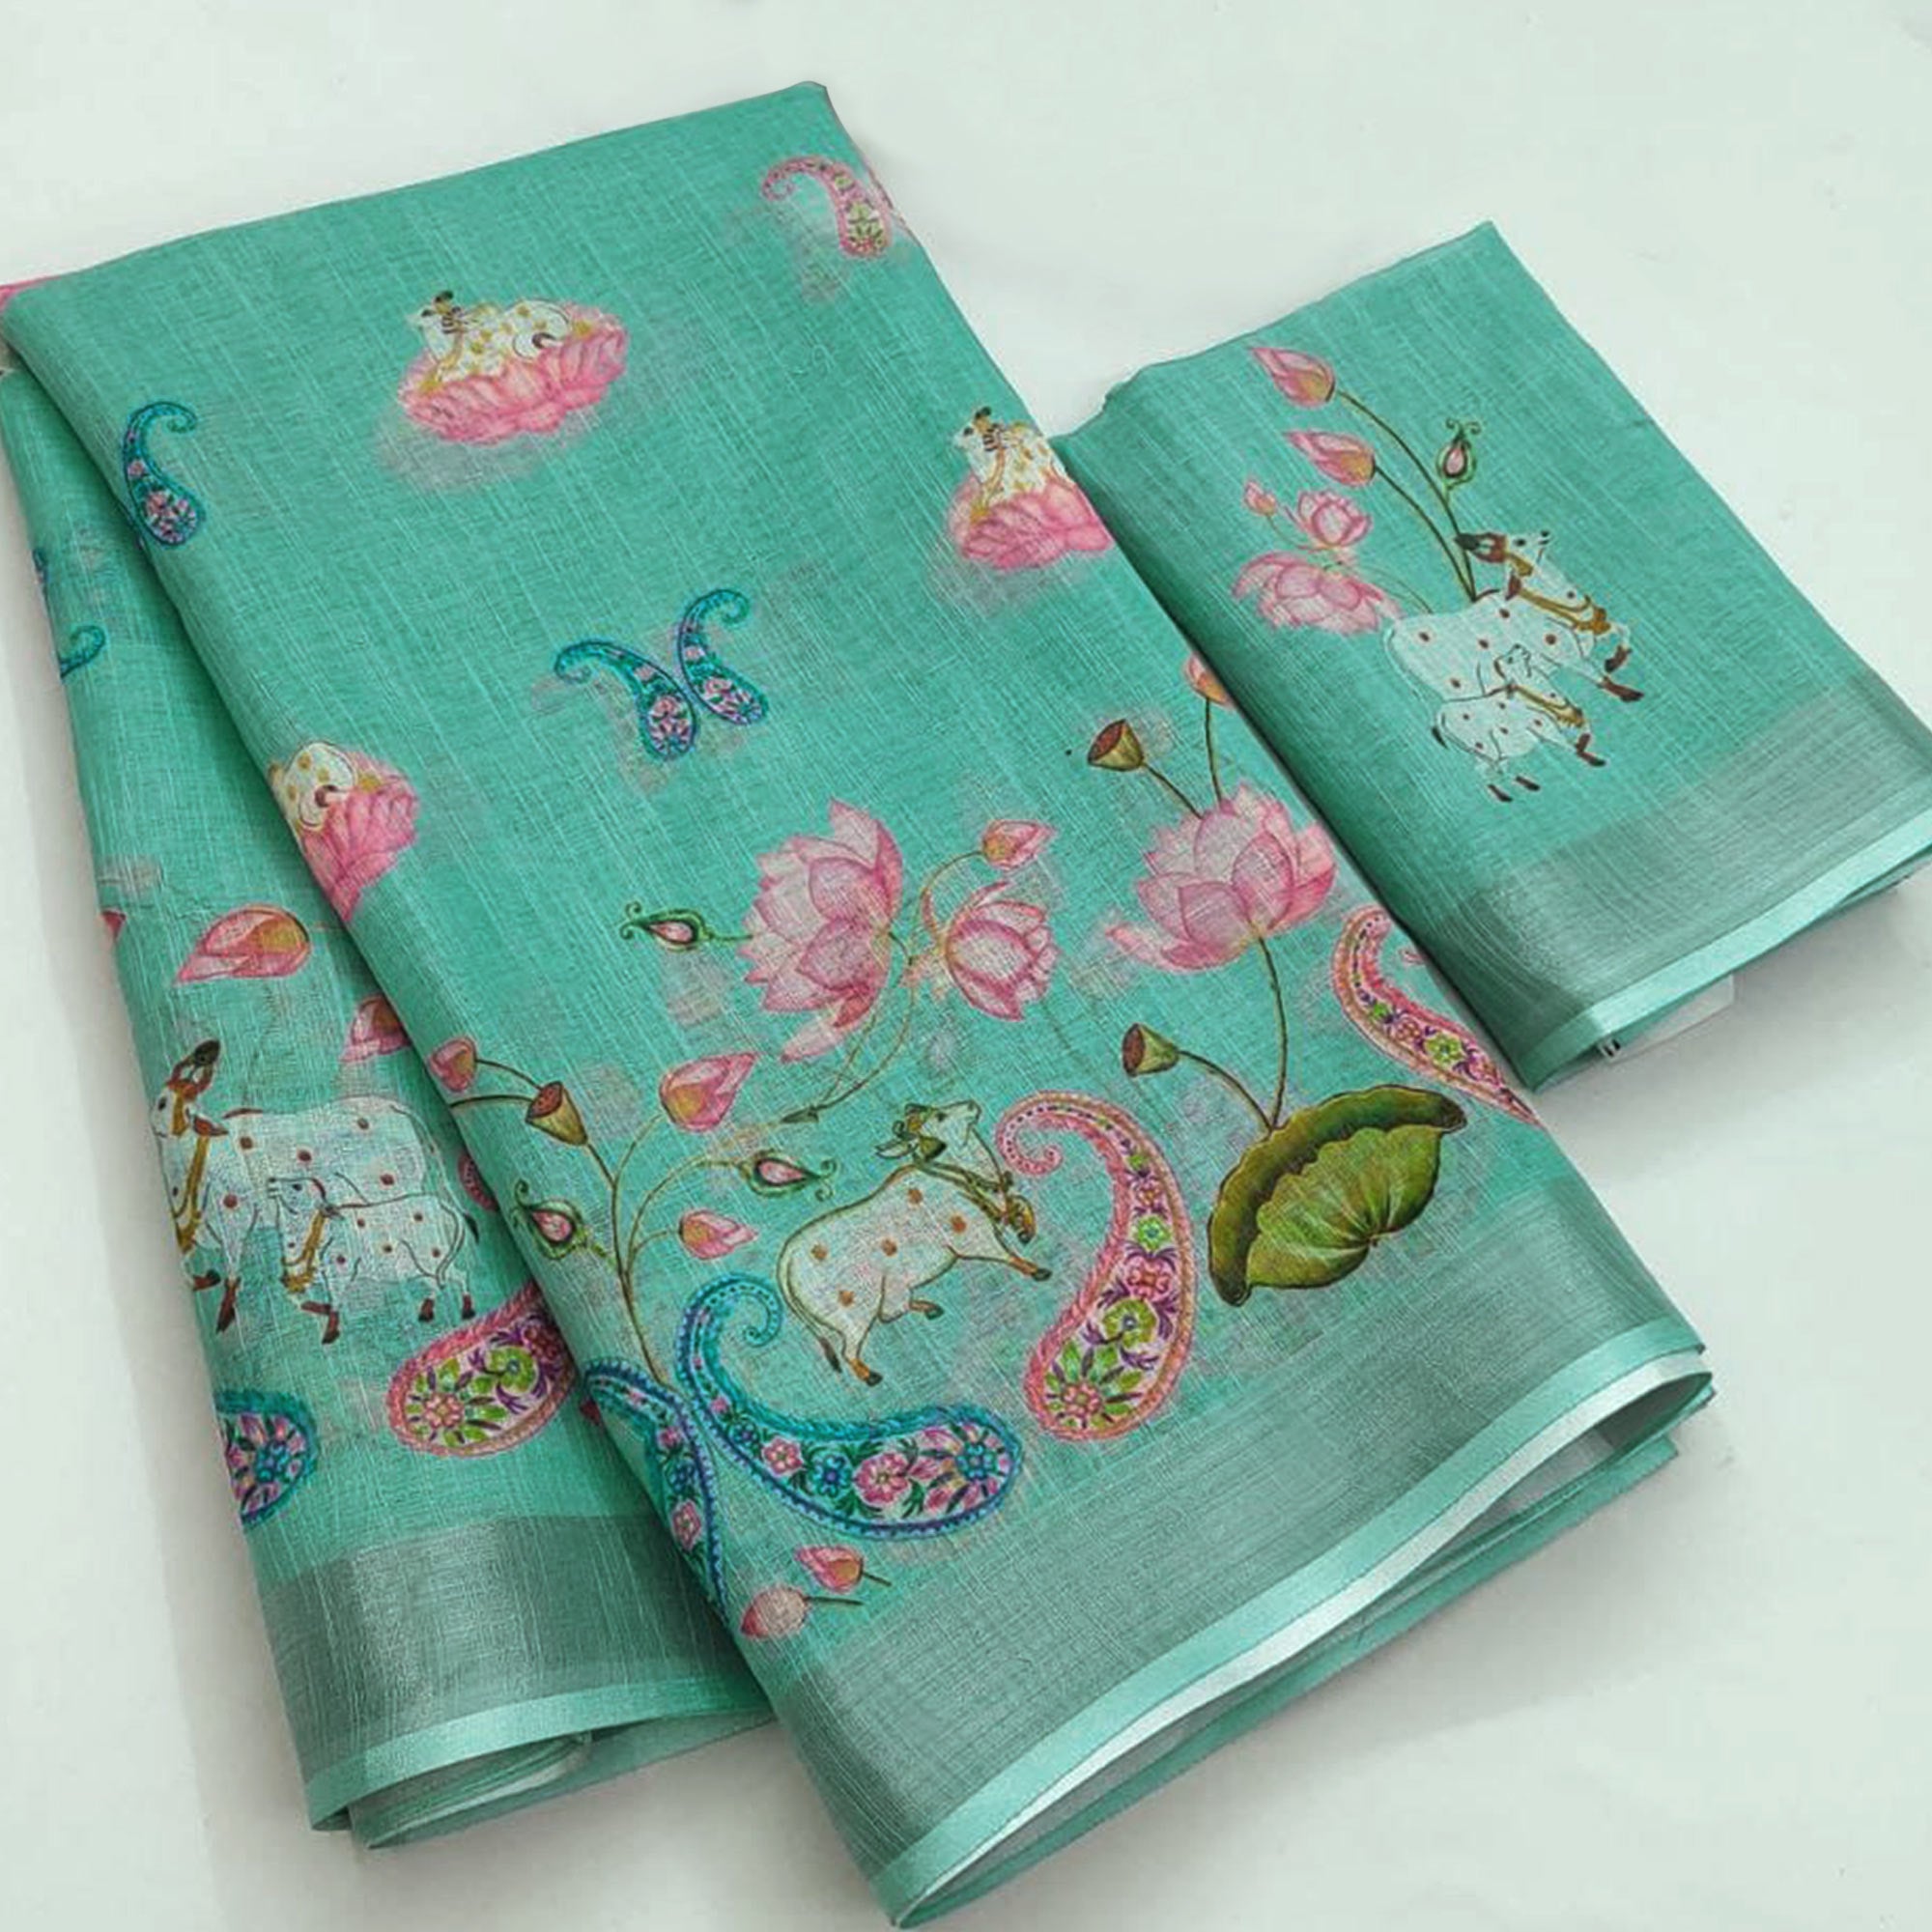 Turquoise Digital Printed Linen Saree